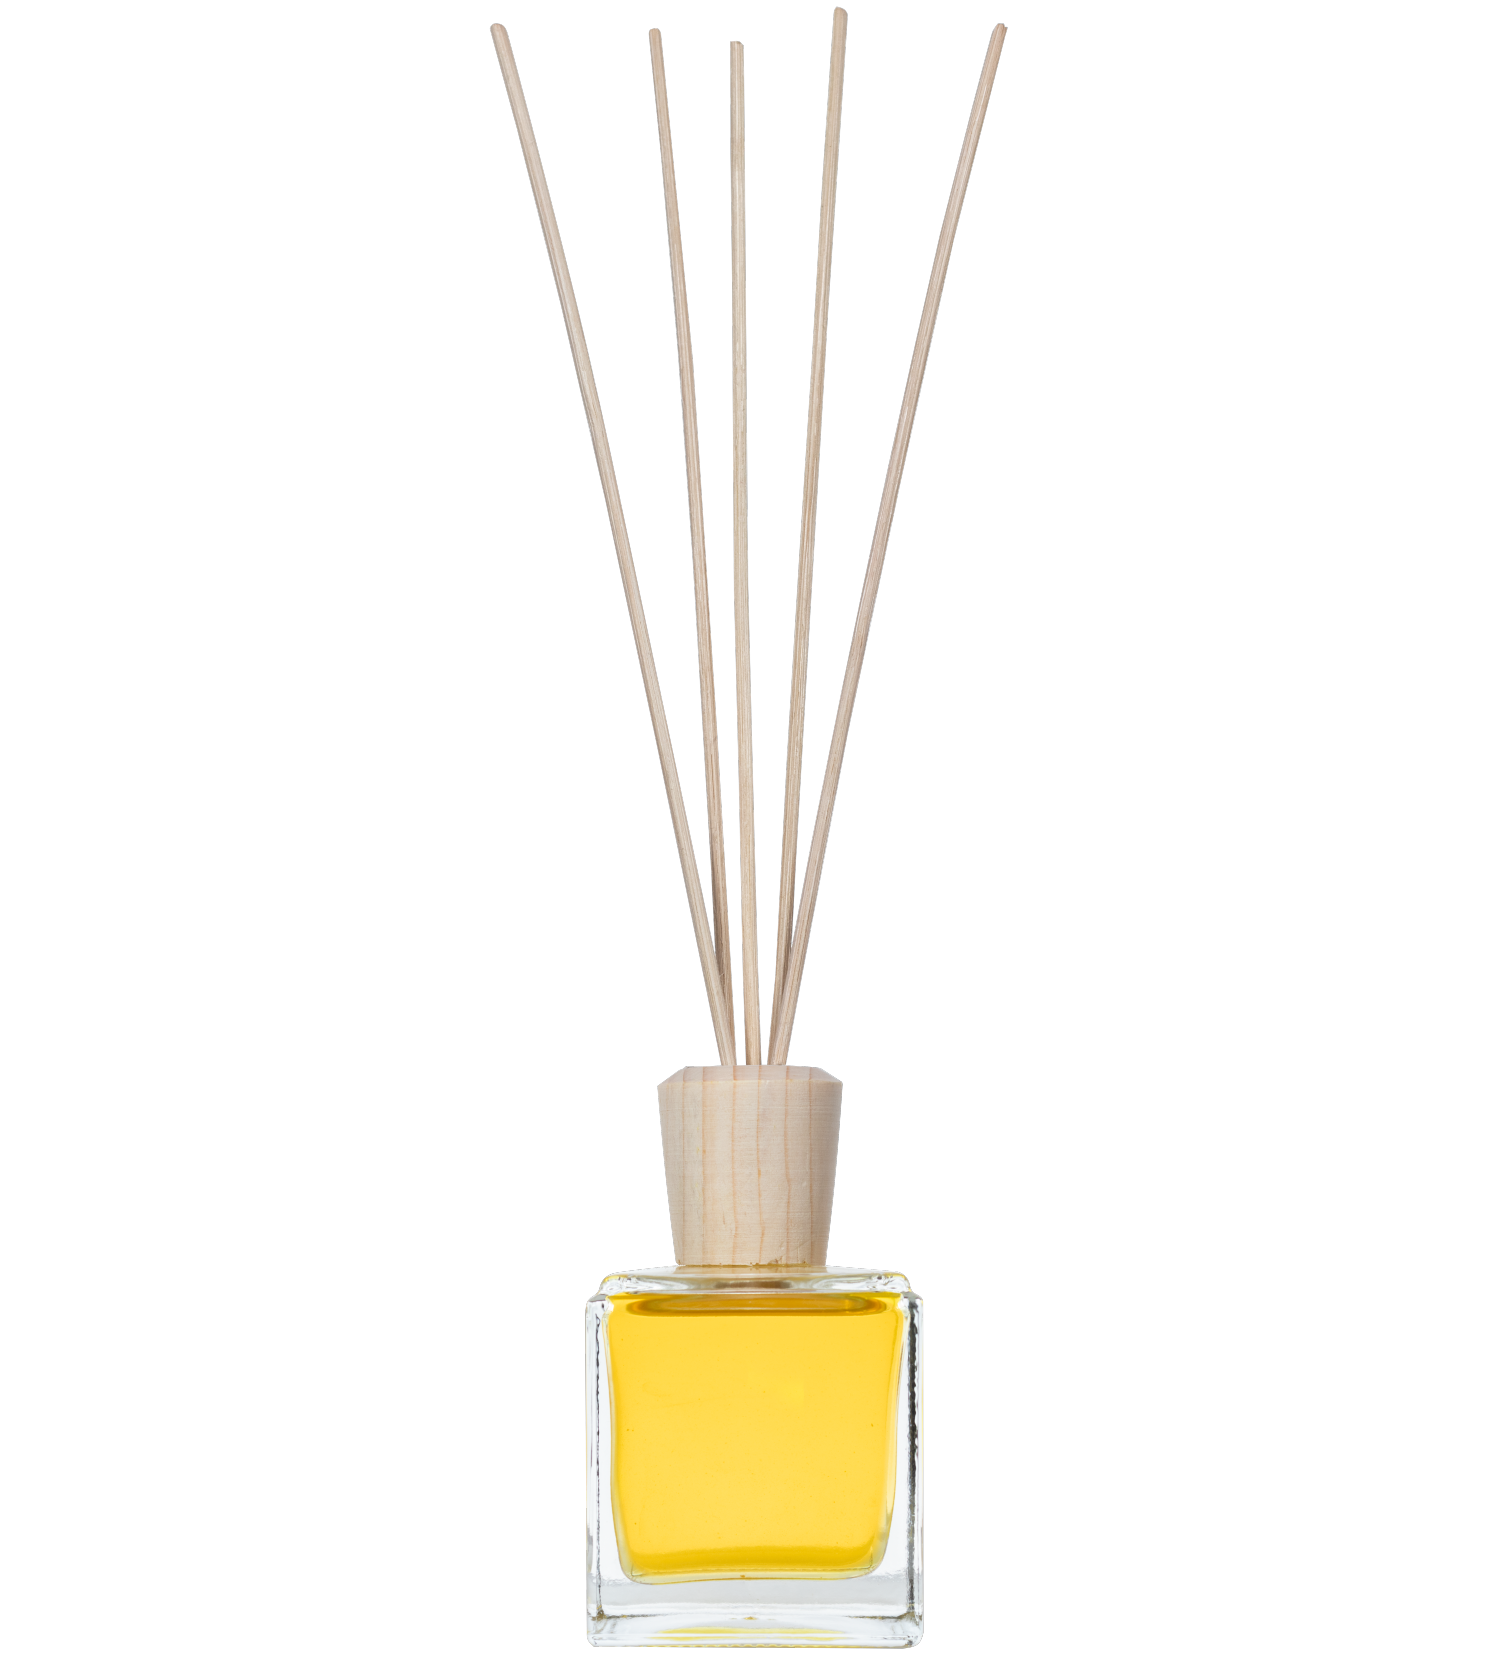 Anandin Reed Diffuser - Samruddhi/Blaze Fragrance - 200ml+10Sticks